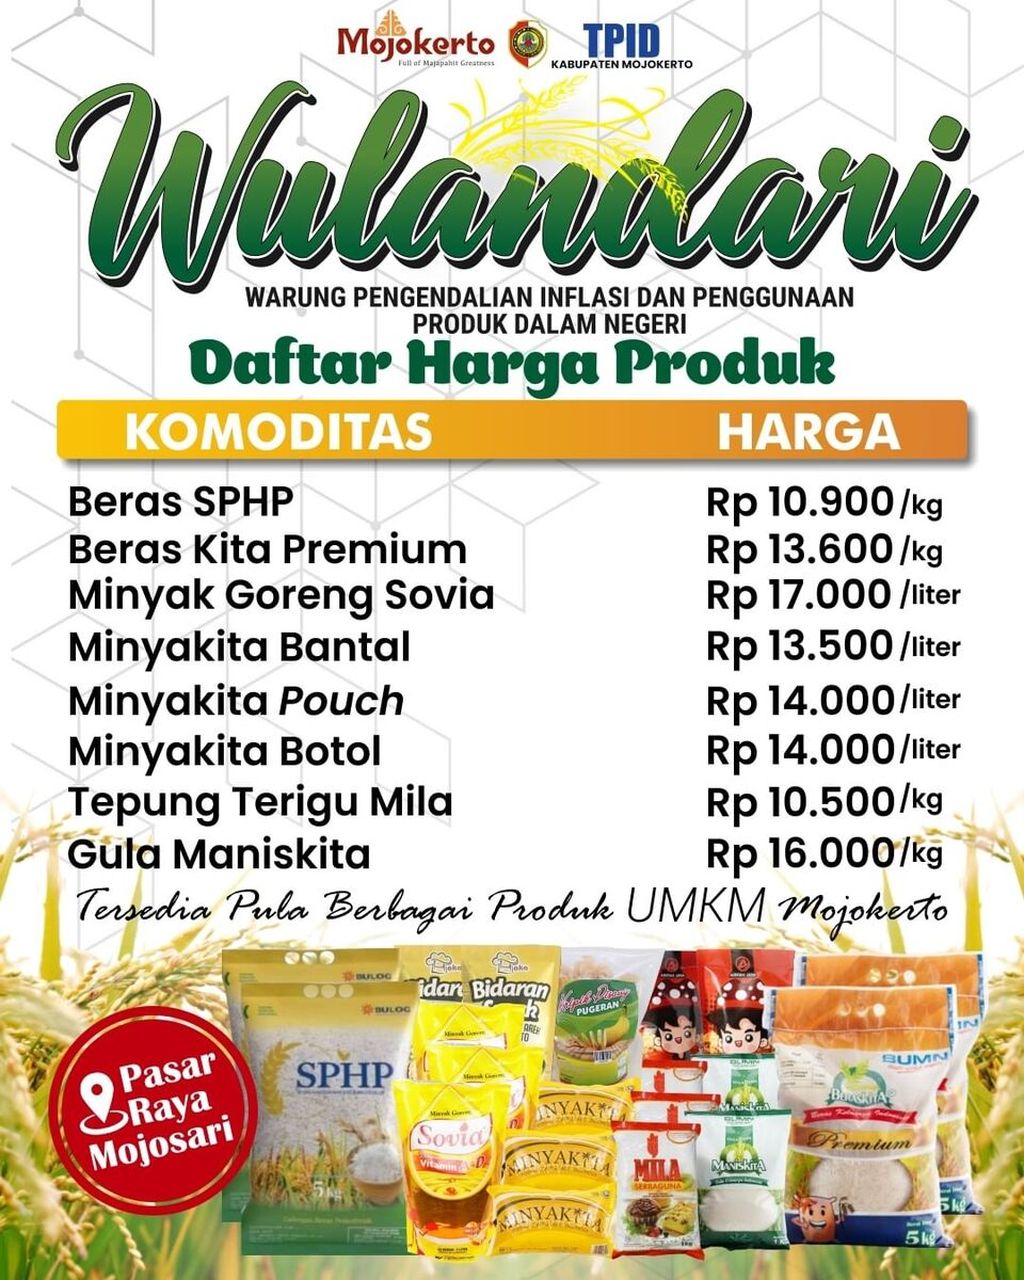 Daftar harga produk pangan yang dijual di gerai Warung Pengendalian Inflasi dan Penggunaan Produk Dalam Negeri (Wulandari) di Kabupaten Mojokerto, Jawa Timur.